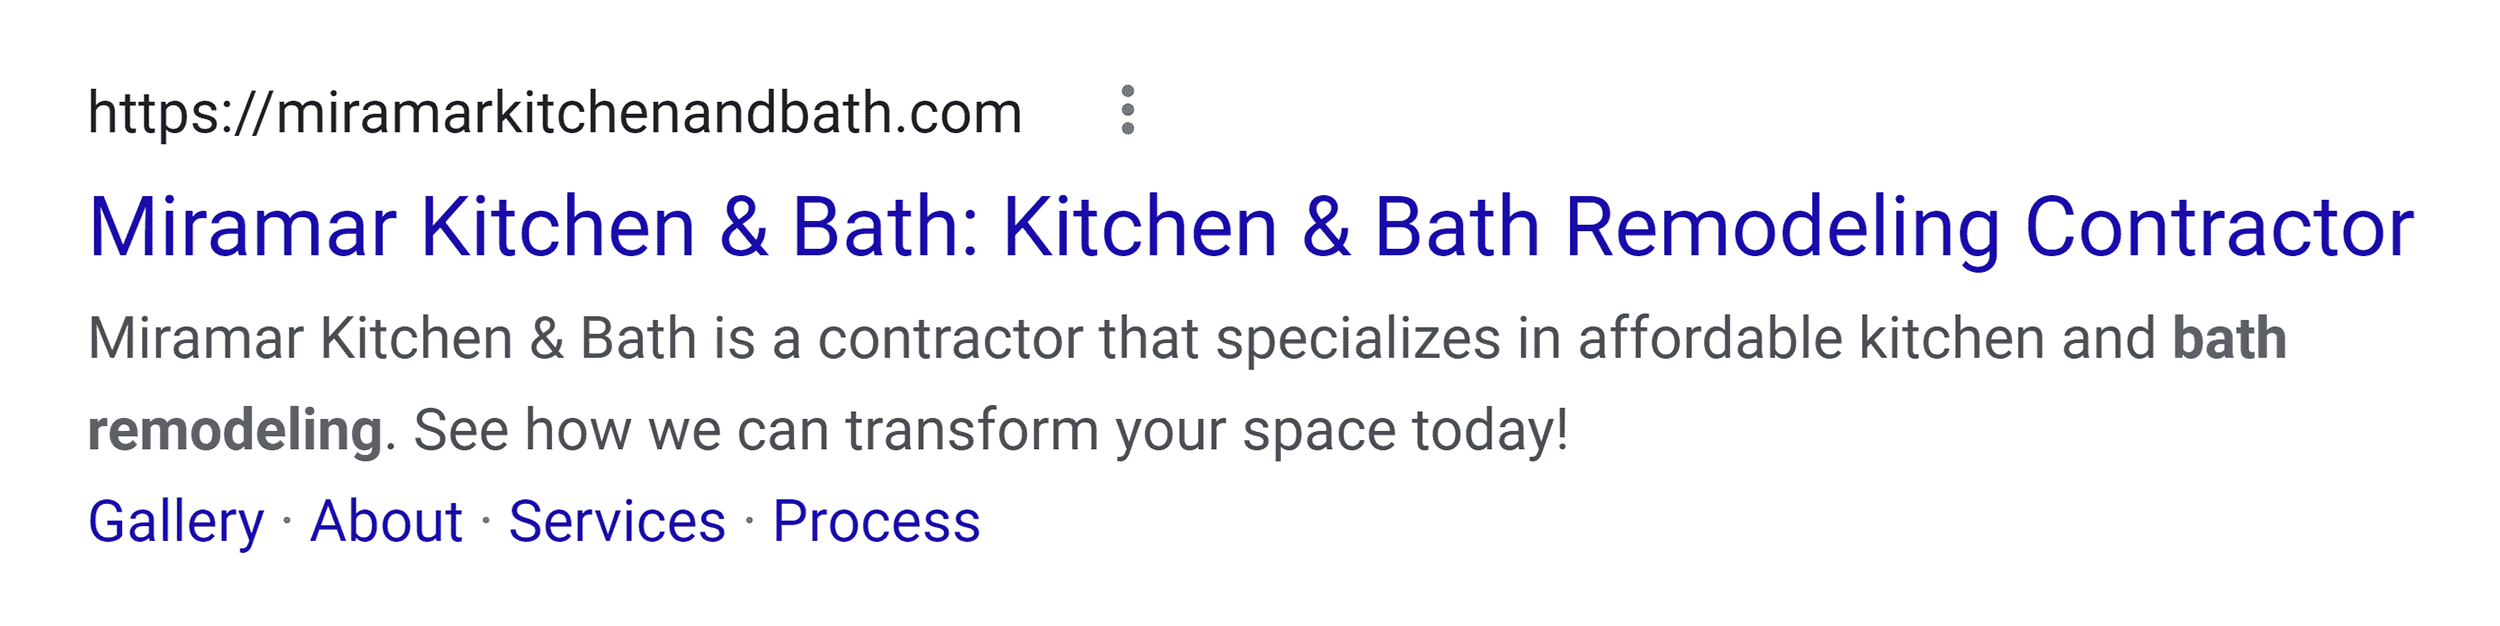 Miramar kitchen and bath remodeling